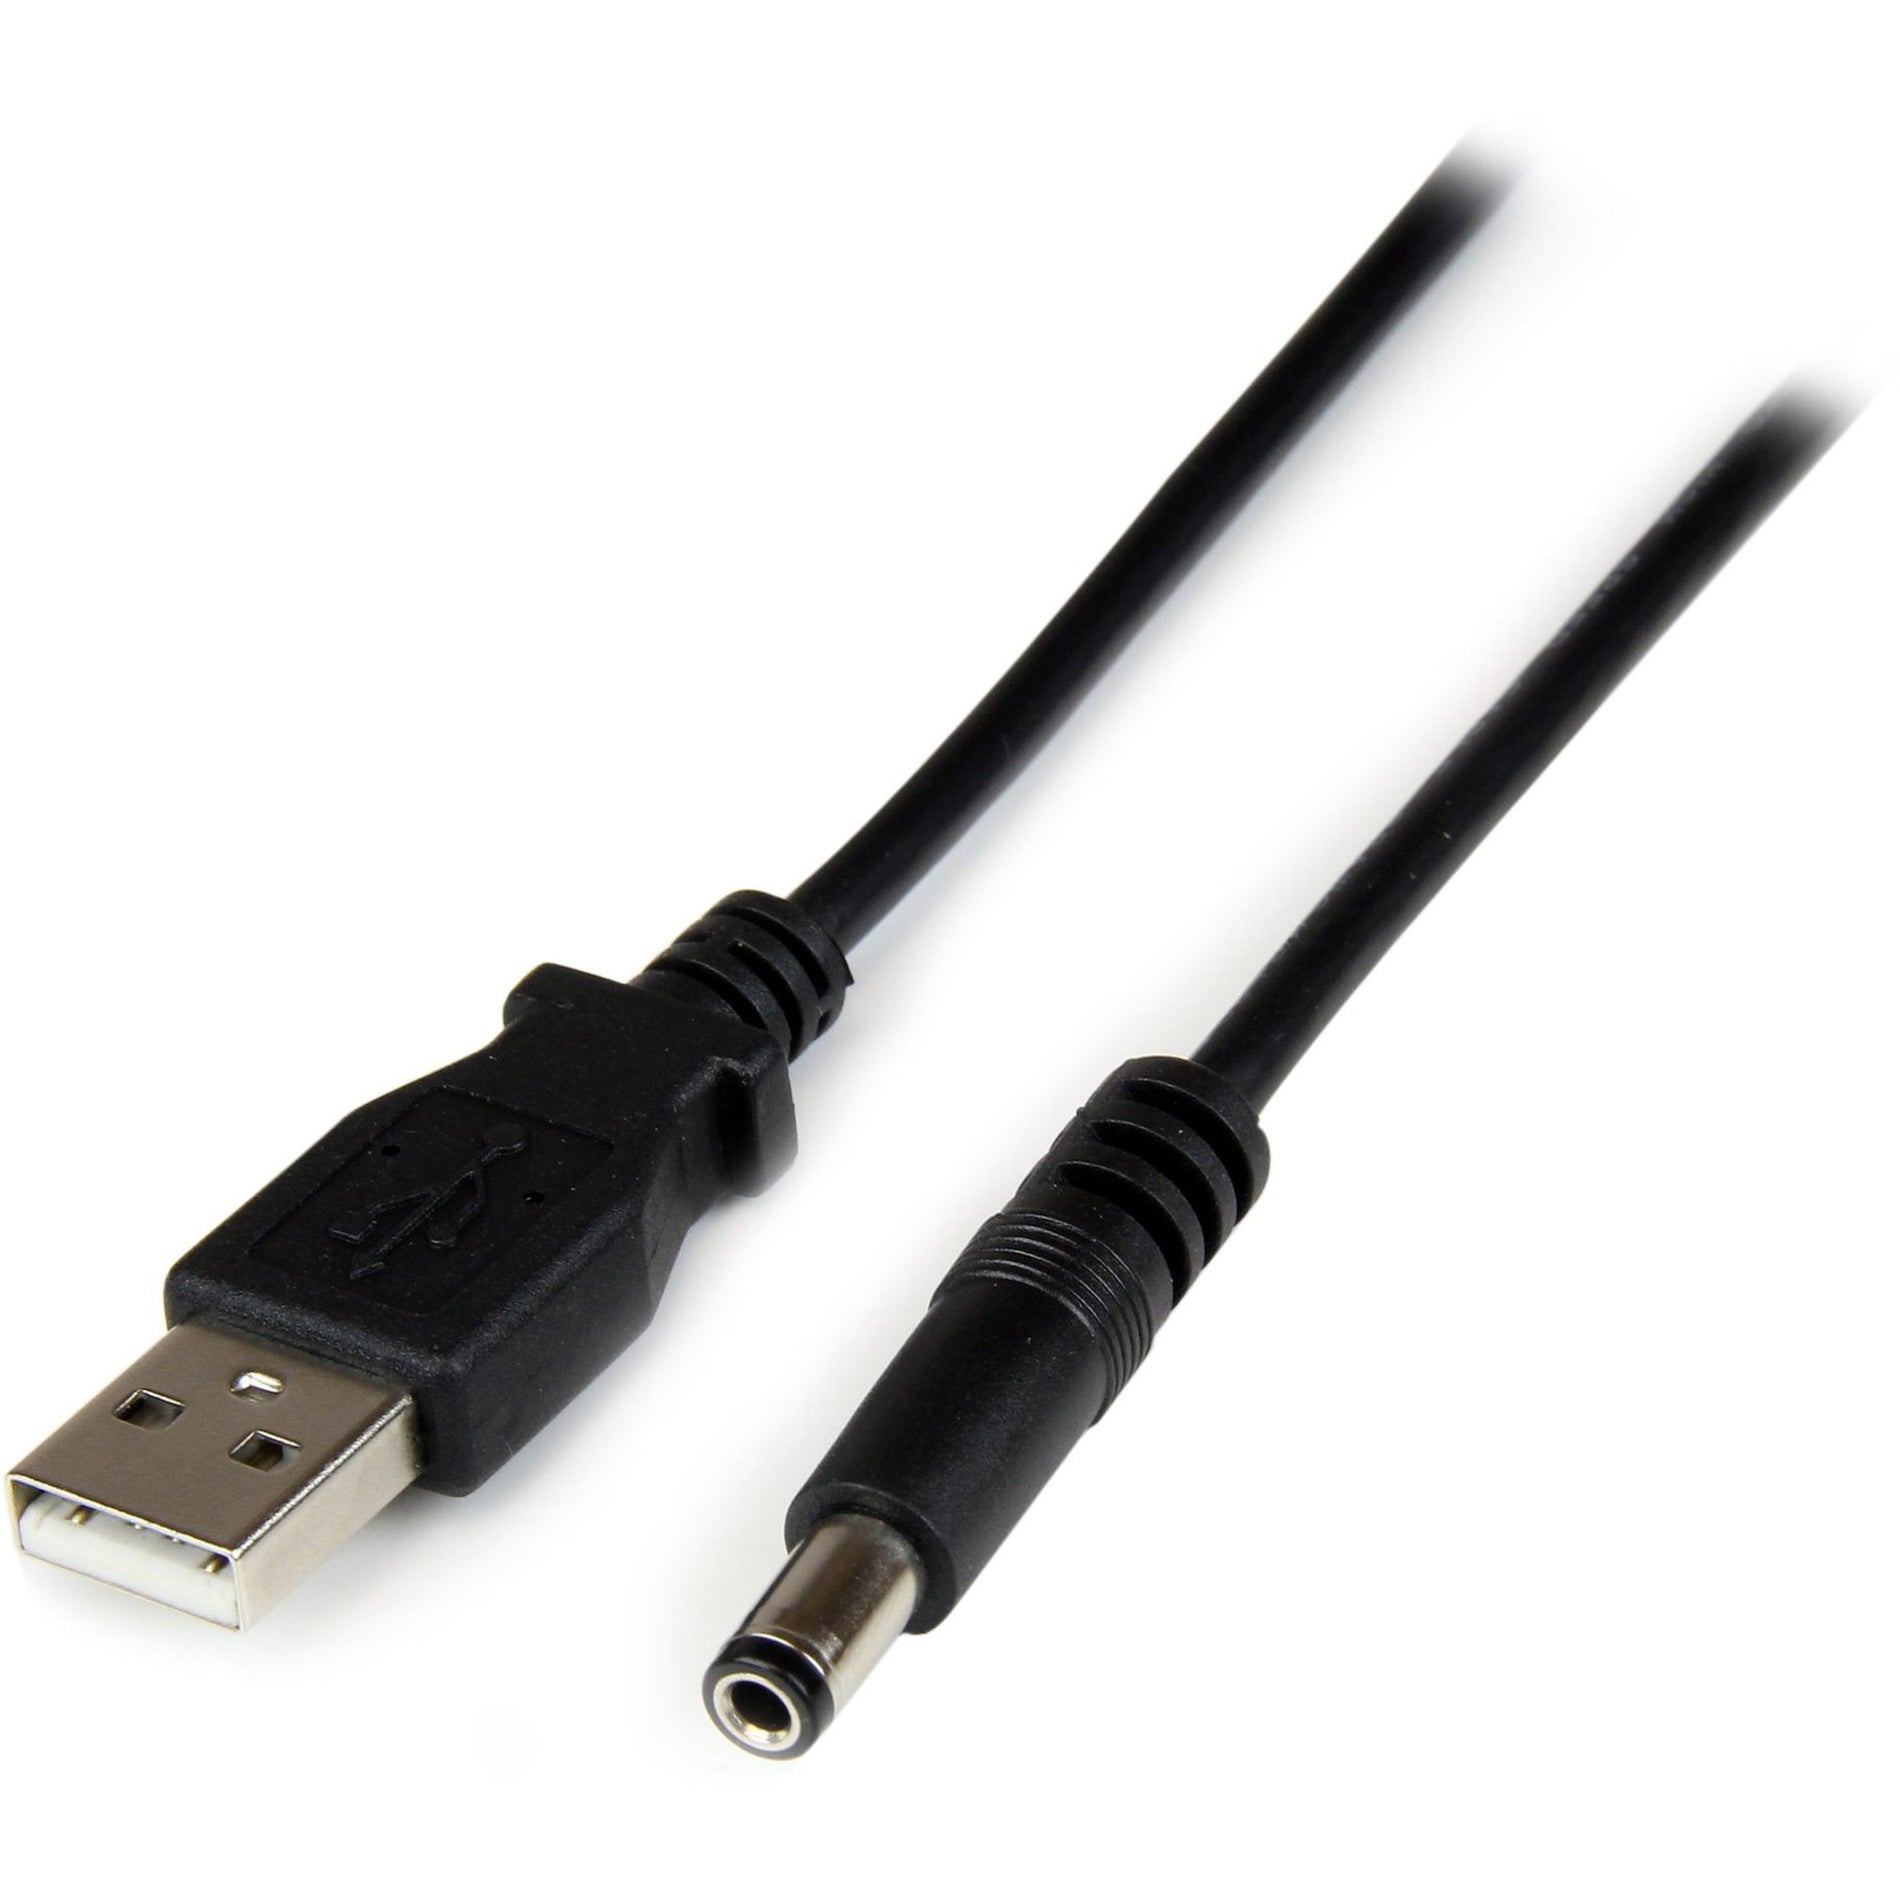 StarTech.com USB2TYPEN1M 1m USB to Type N Barrel 5V DC Power Cable, Black, Lifetime Warranty